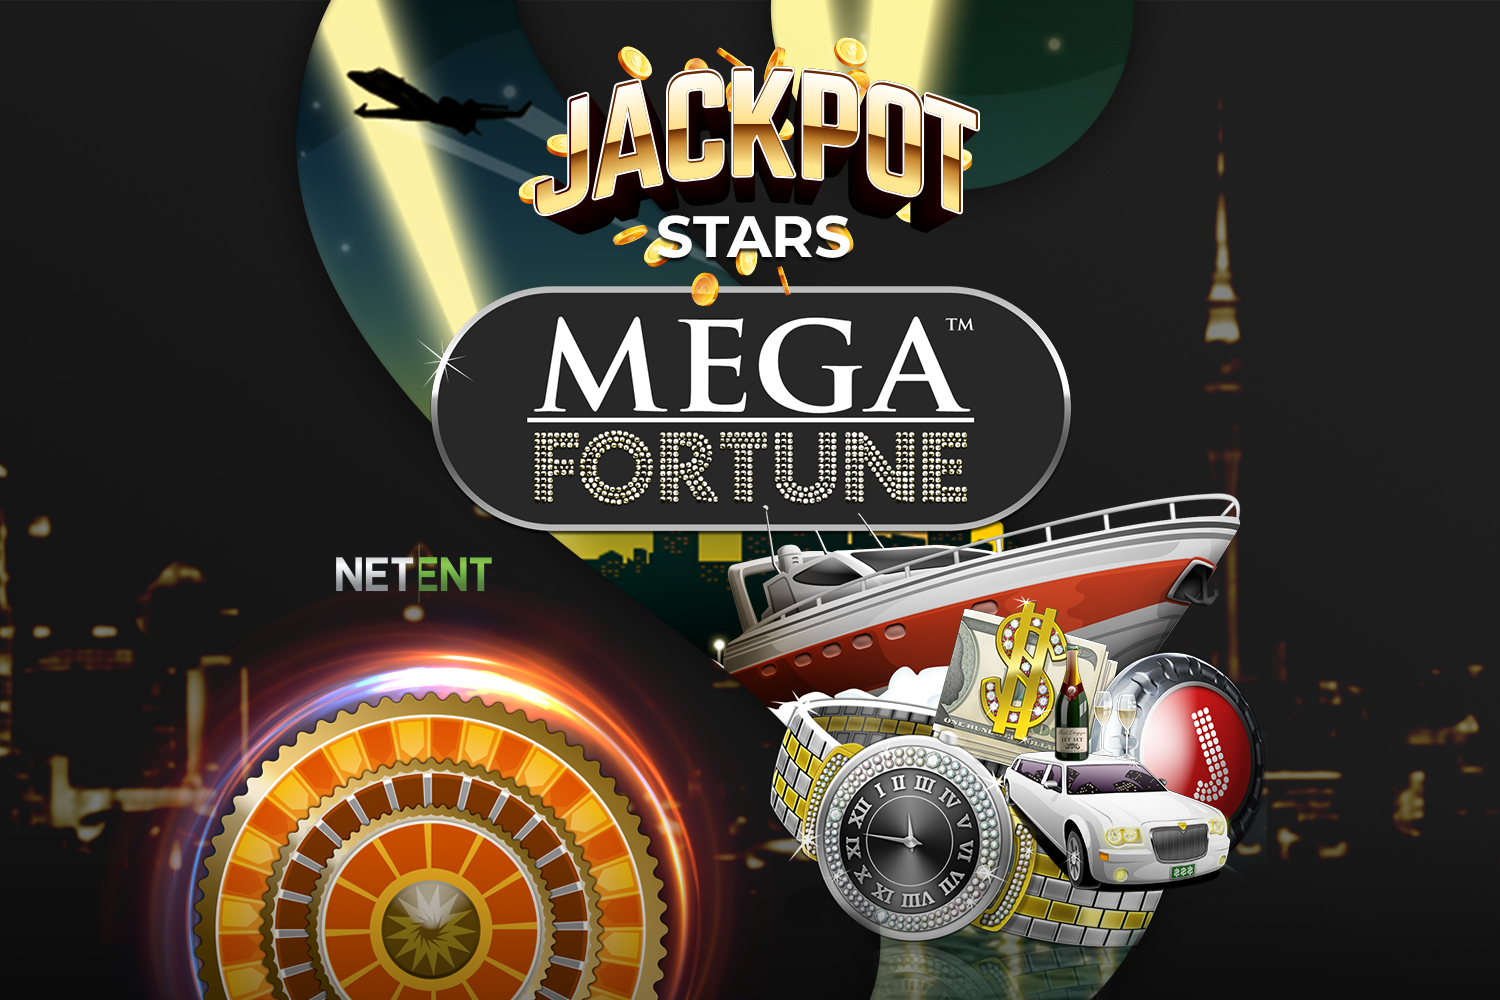 Mega Fortune Slot by Netent